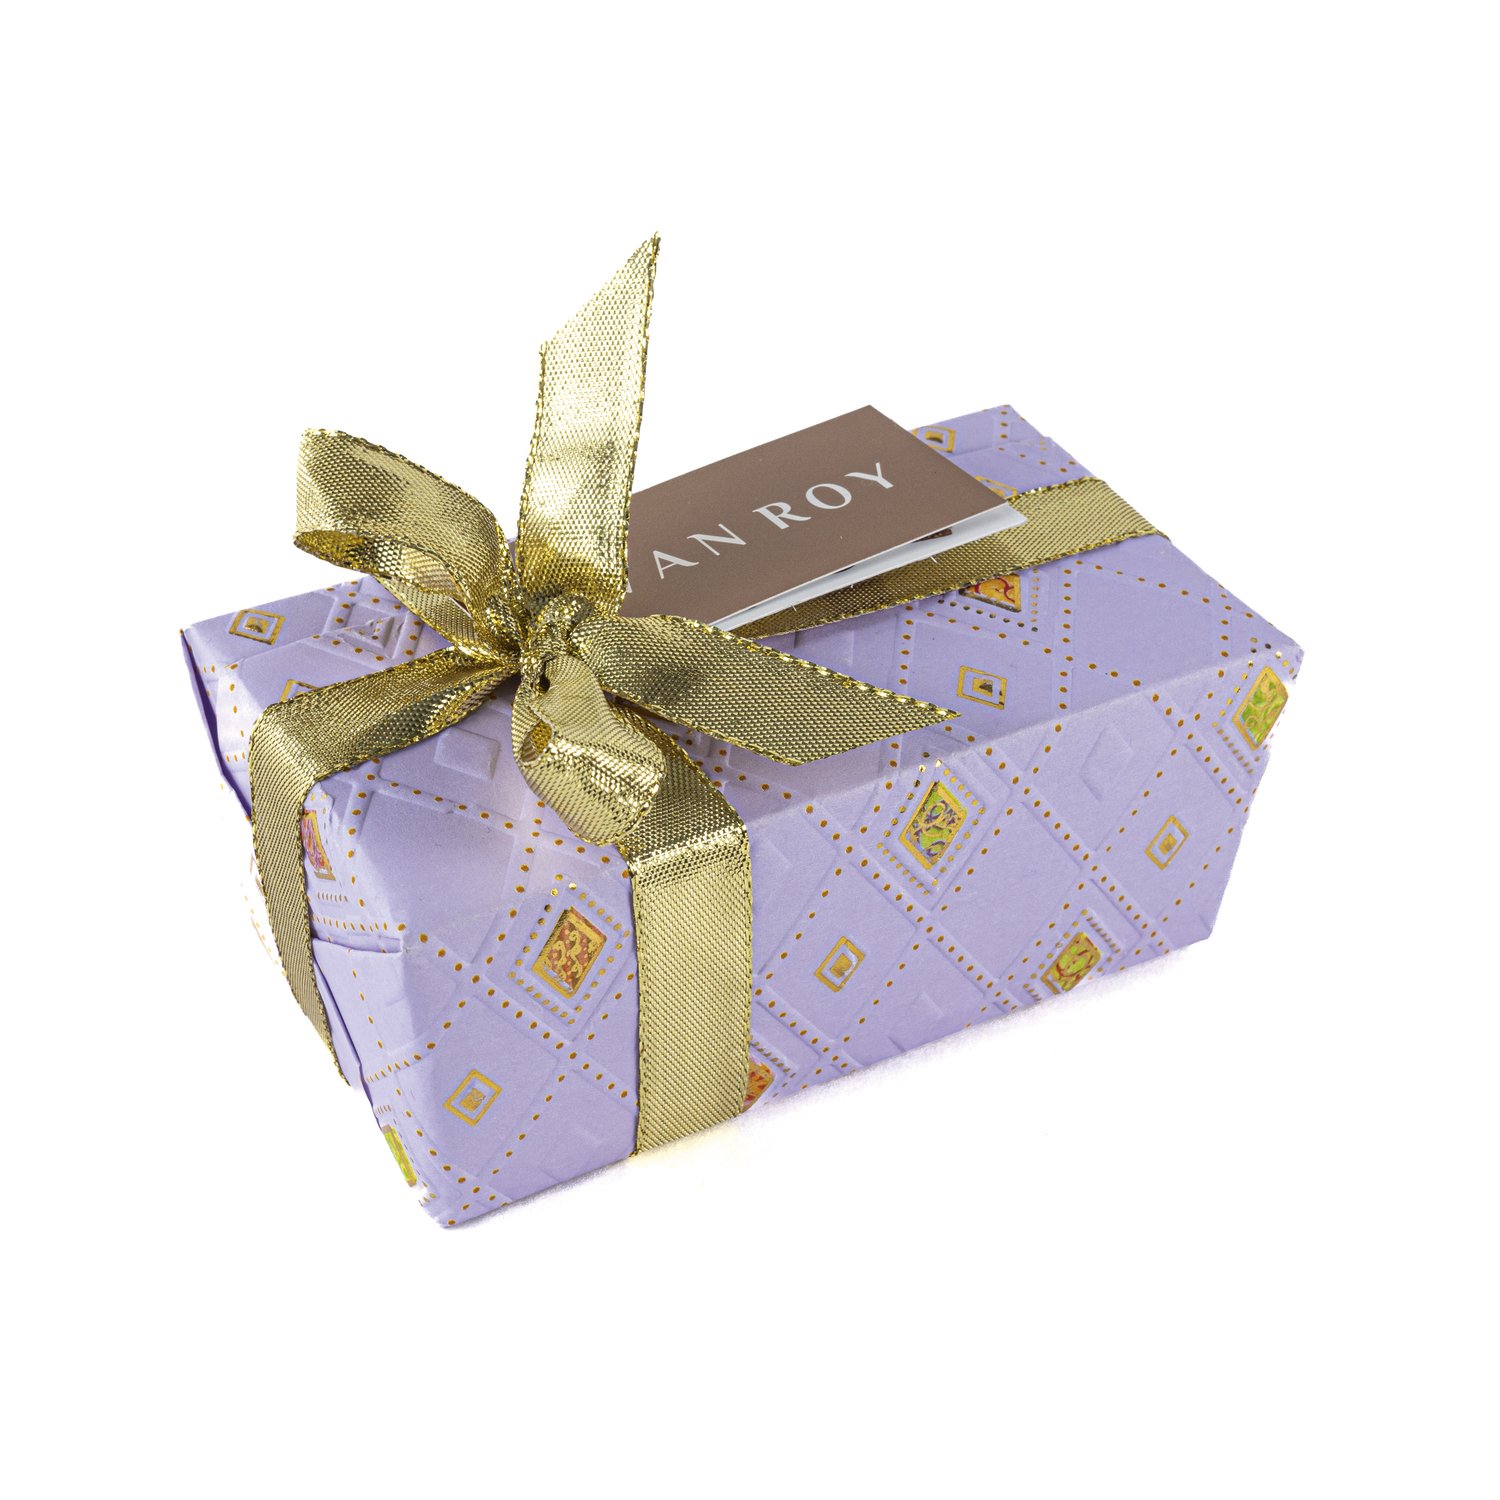 Non Alcoholic Belgian chocolates in gift wrapped ballotins - 2 designs - 8x210g